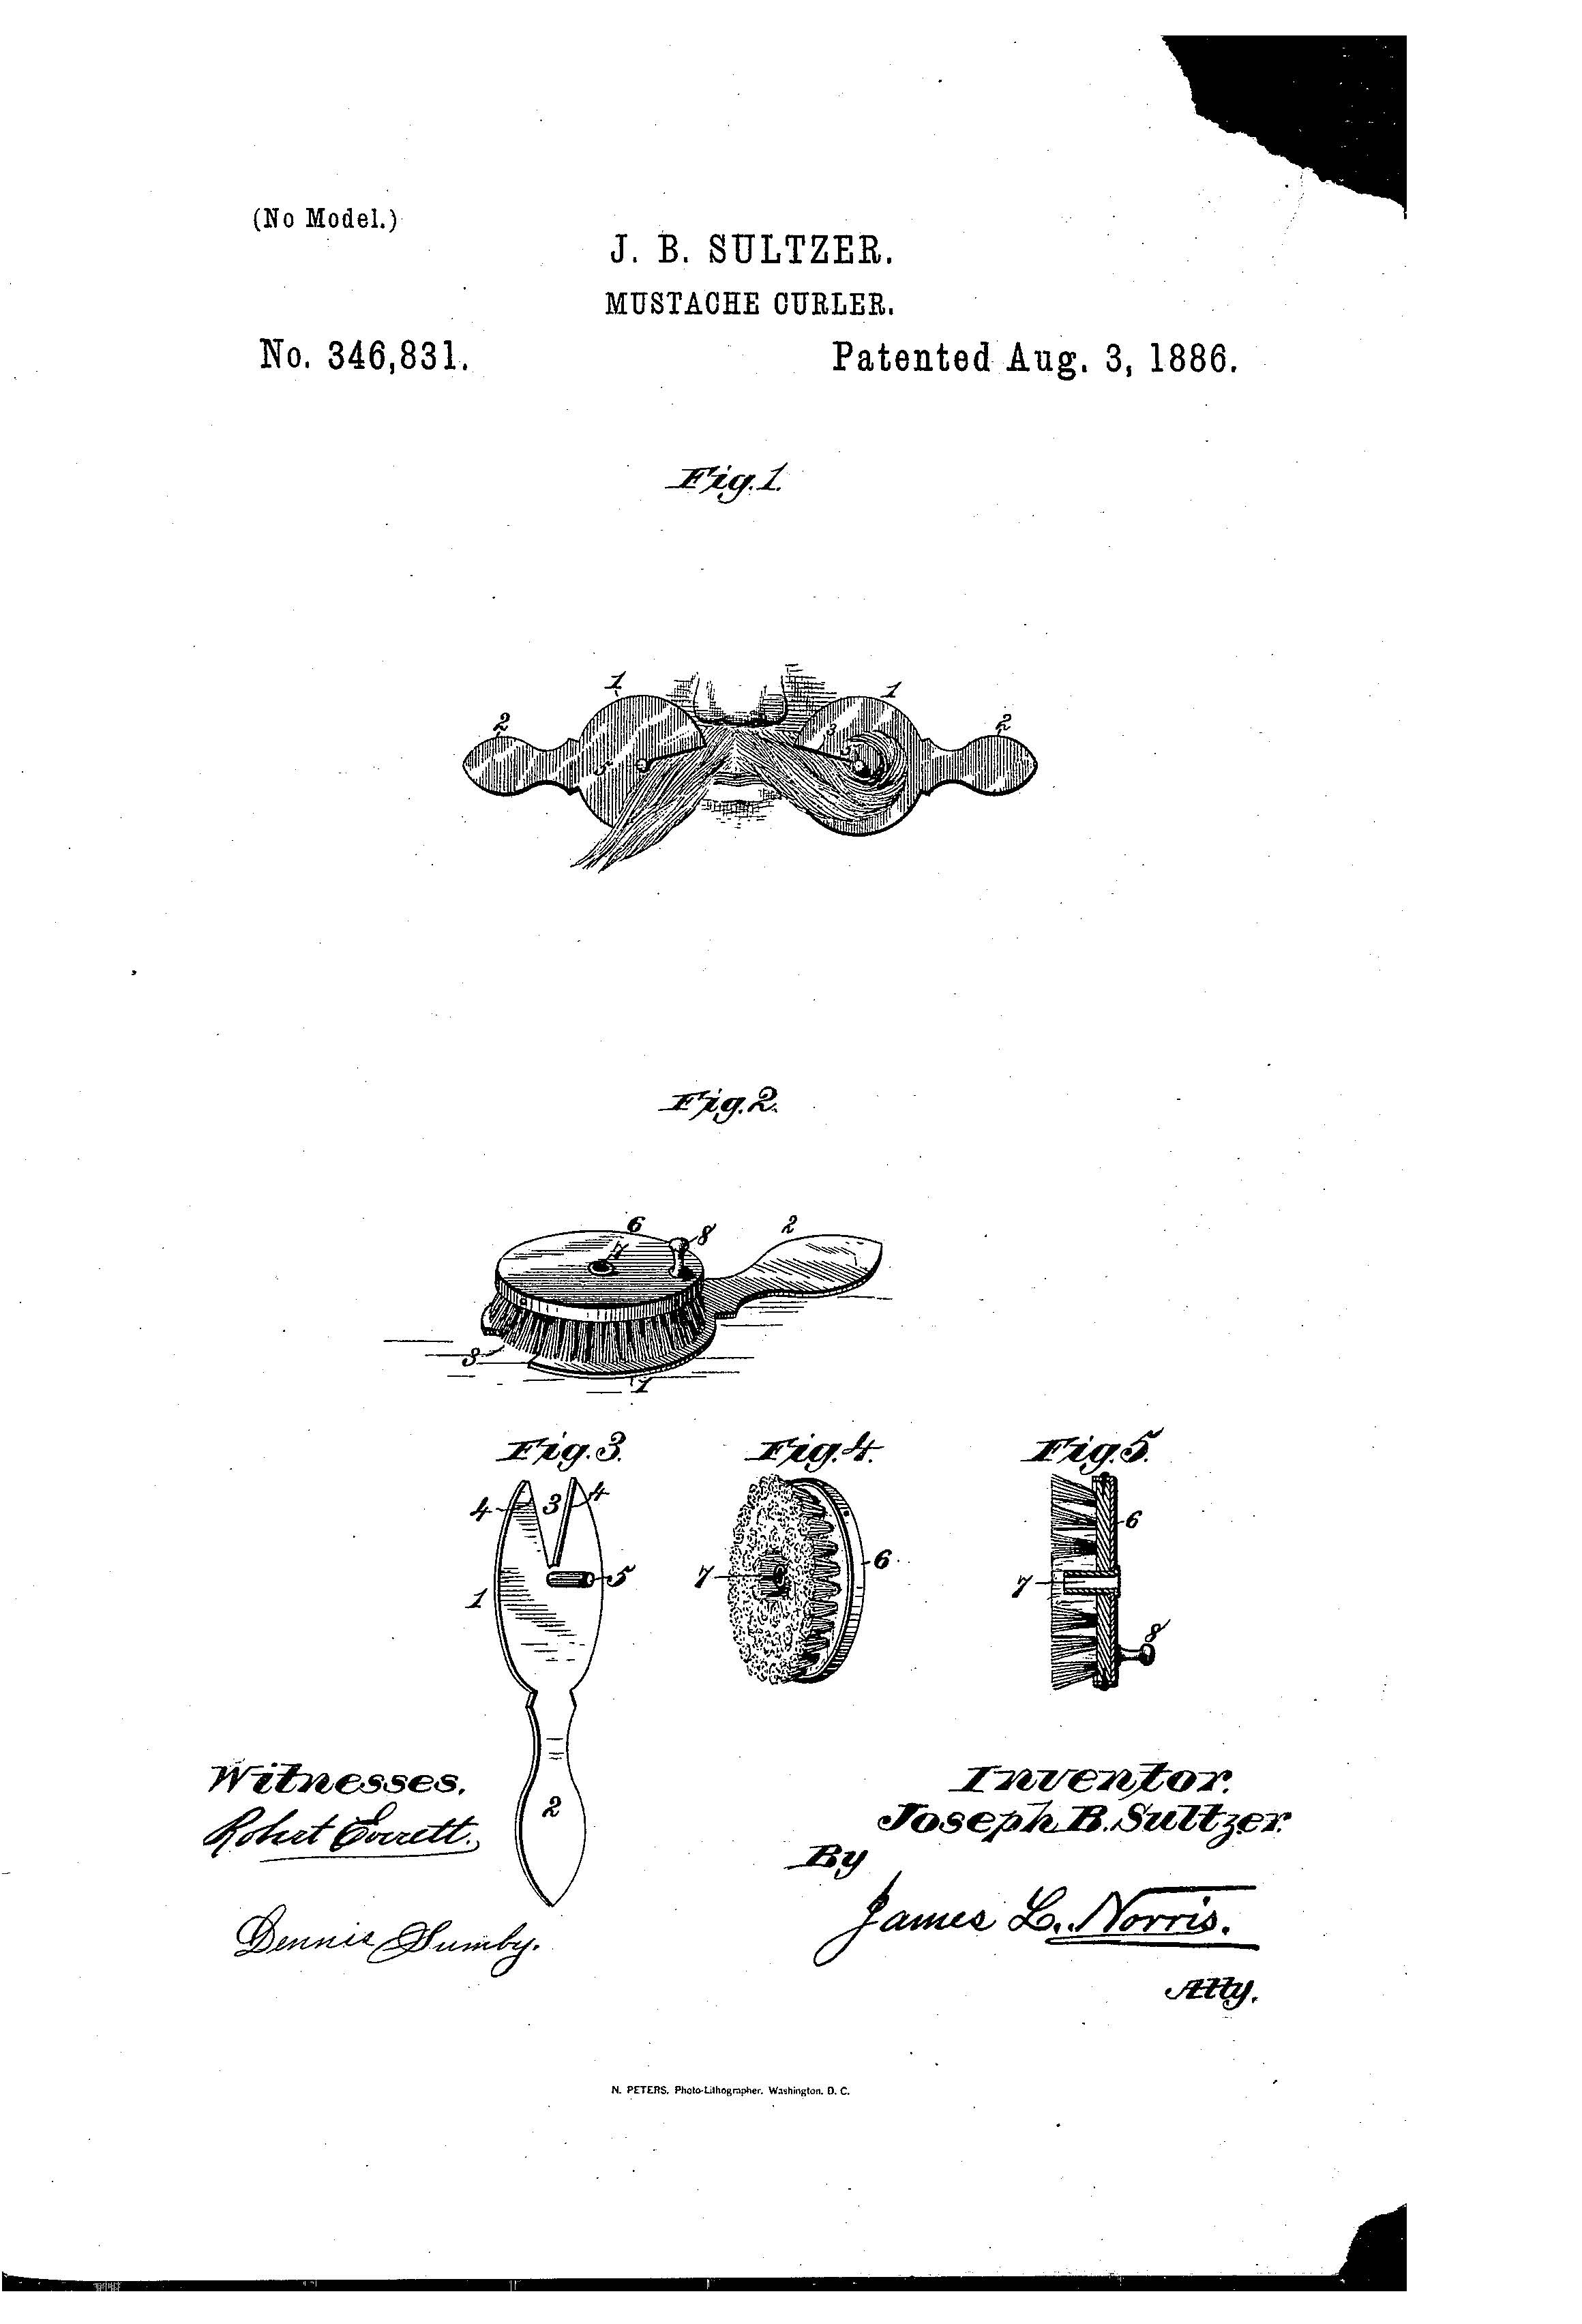 Mustache Curler Patent